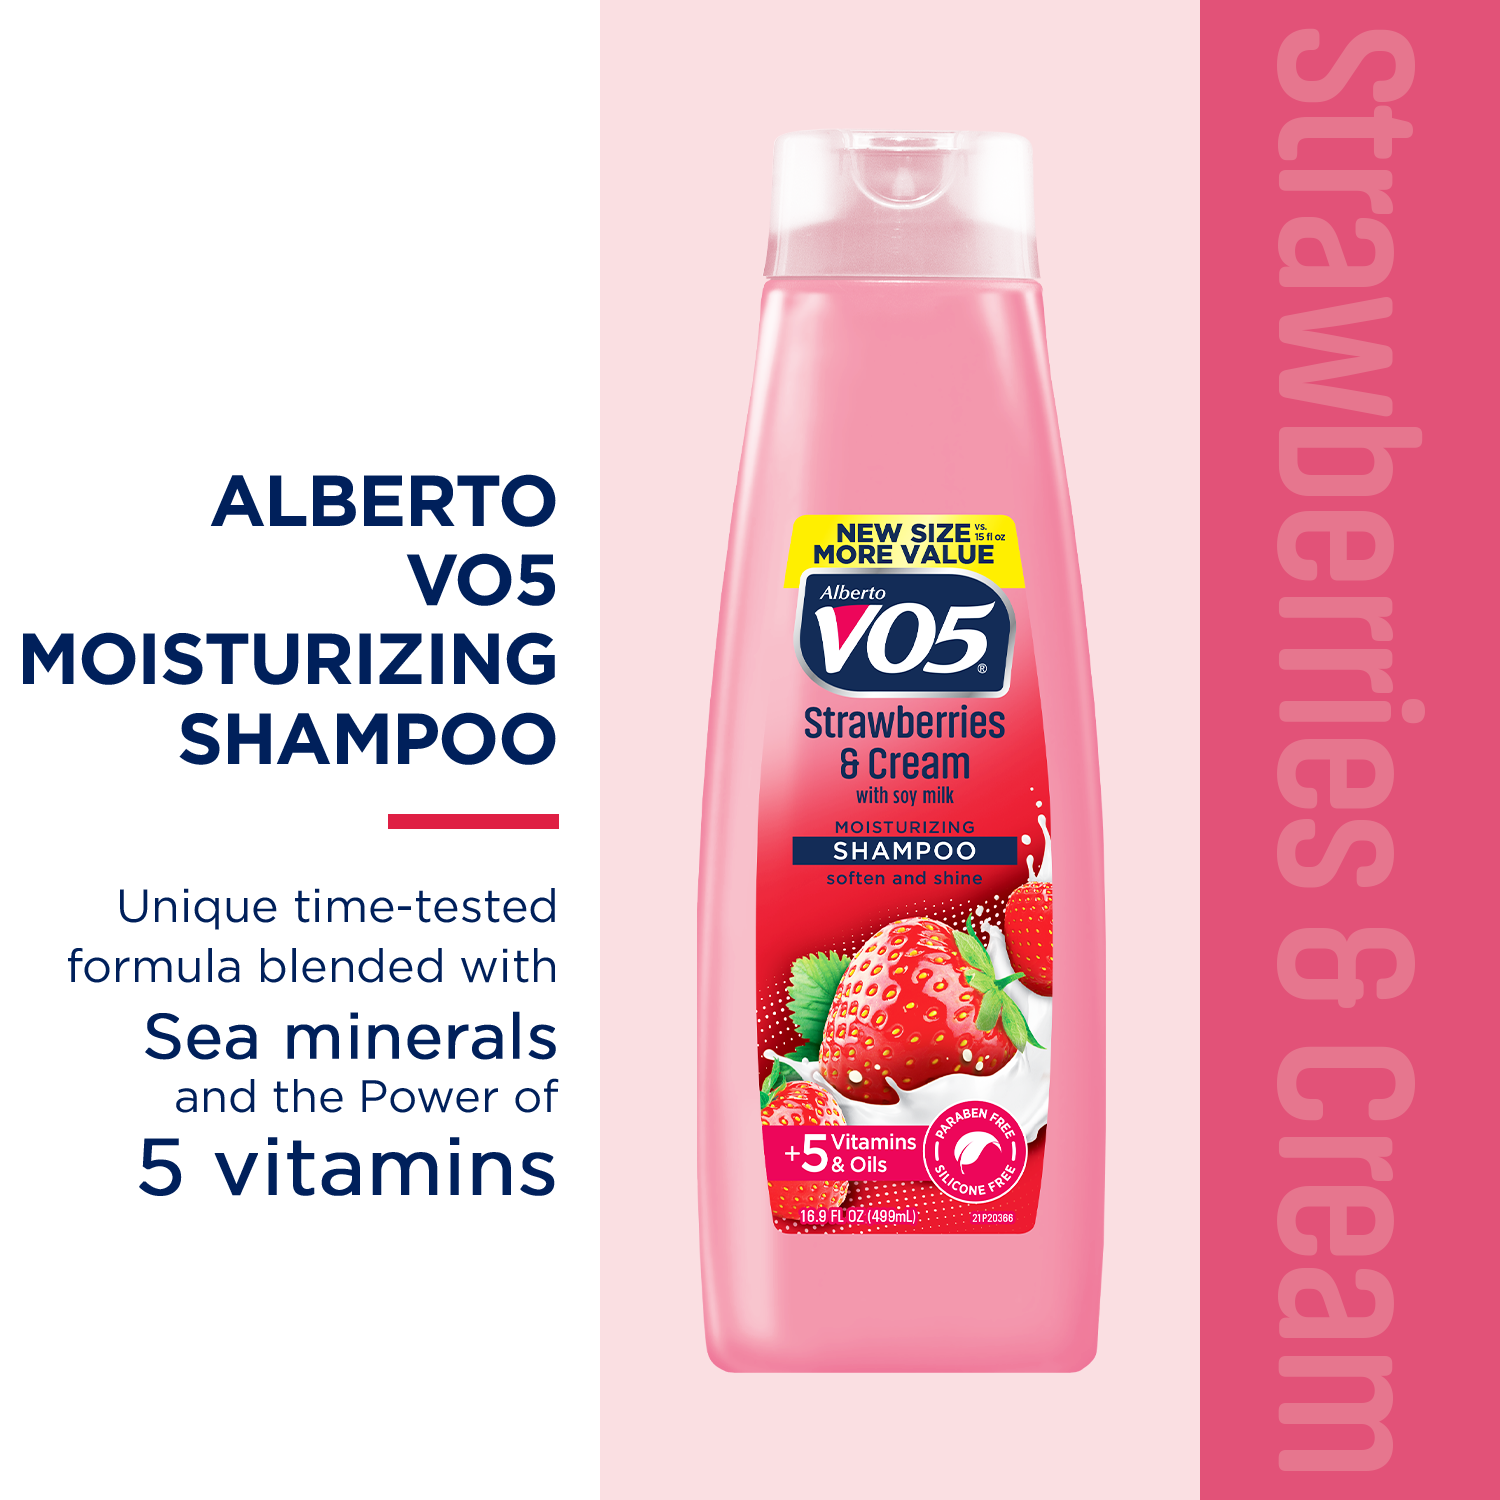 Alberto VO5 Strawberries & Cream Moisturizing Shampoo with Soy Milk, for All Hair Types, 16.9 fl oz - image 3 of 6